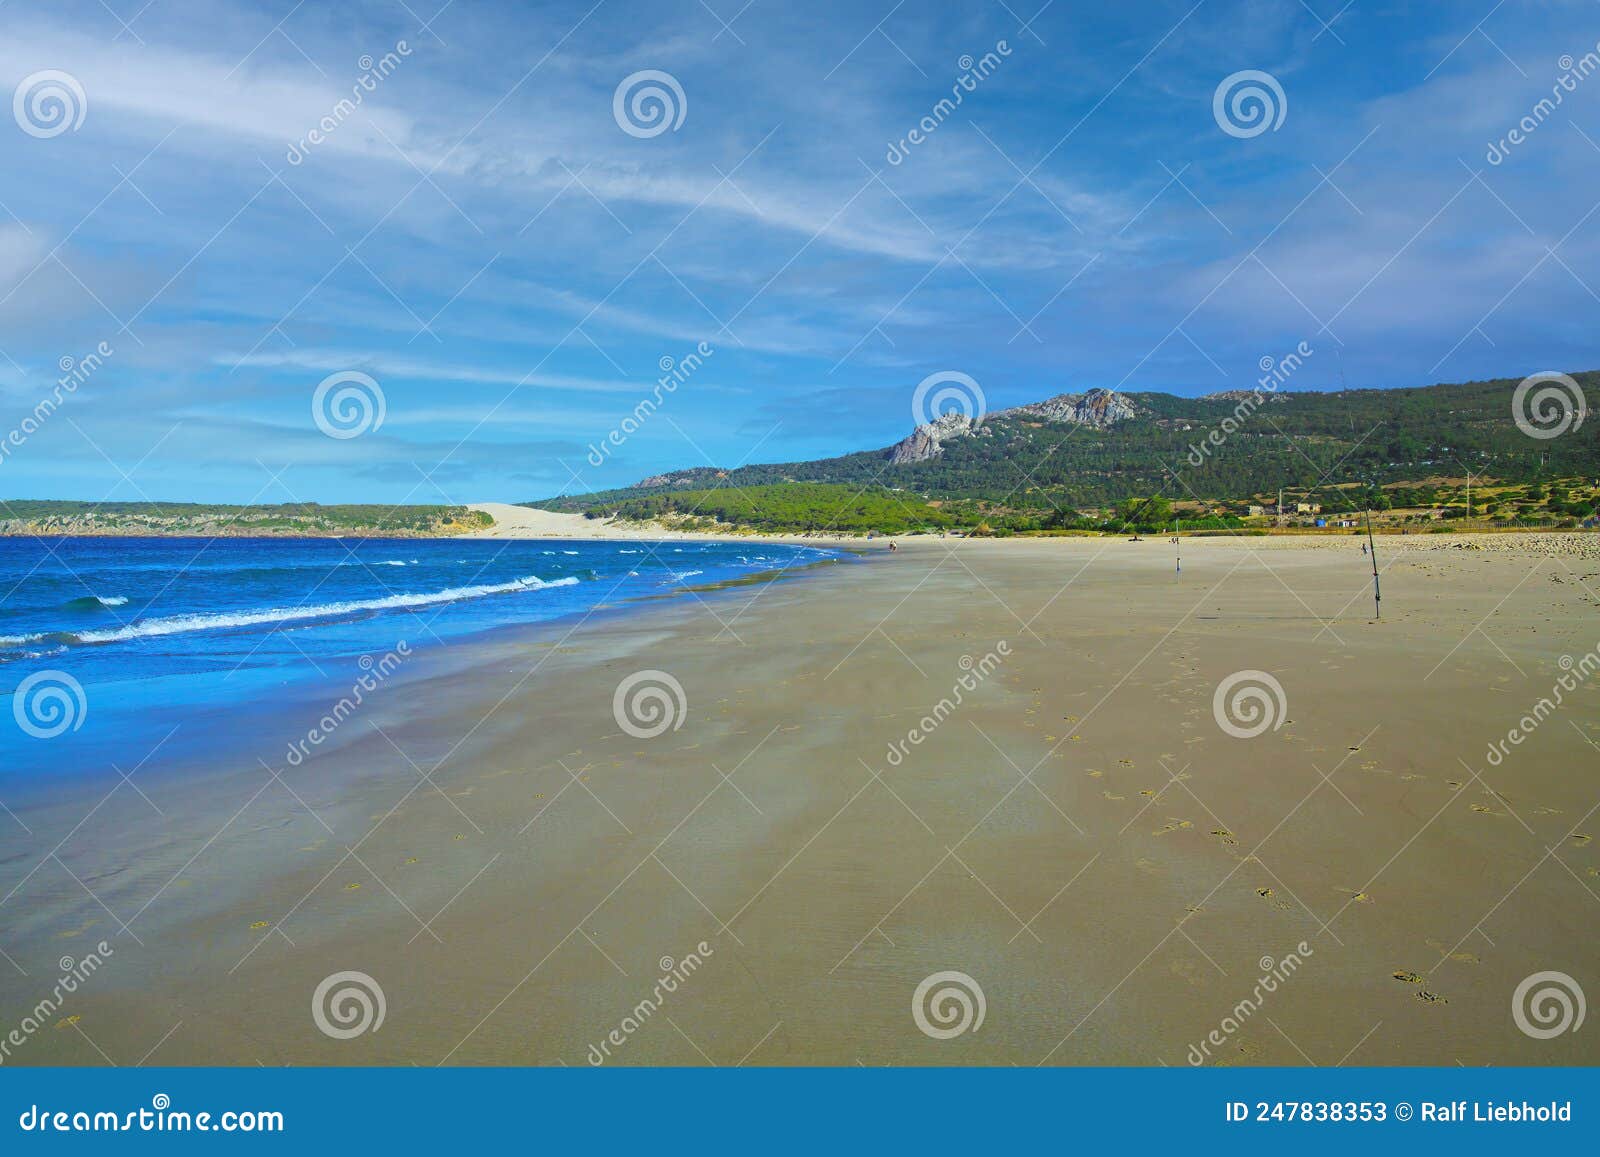 tranquil morning empty sand beach scene, low tide, natural green hills, blue sky - zahara de los atunes, costa de la luz, spain